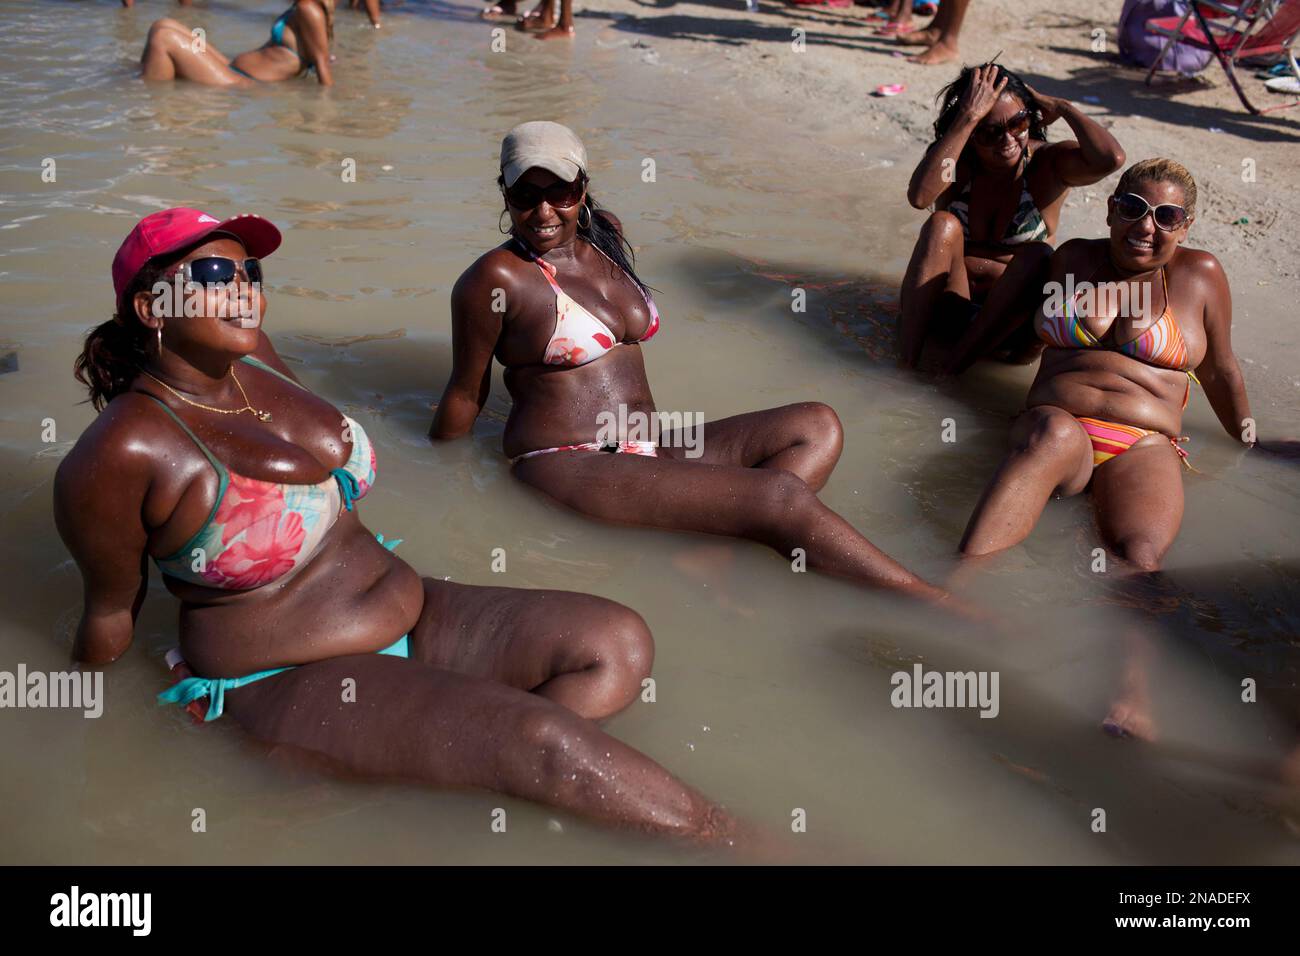 In this photo taken Jan. 24, 2012, women sunbathe at the artificial lake  Piscinao de Ramos in Rio de Janeiro, Brazil. A growing number of bikini  manufacturers have woken up to Brazil's